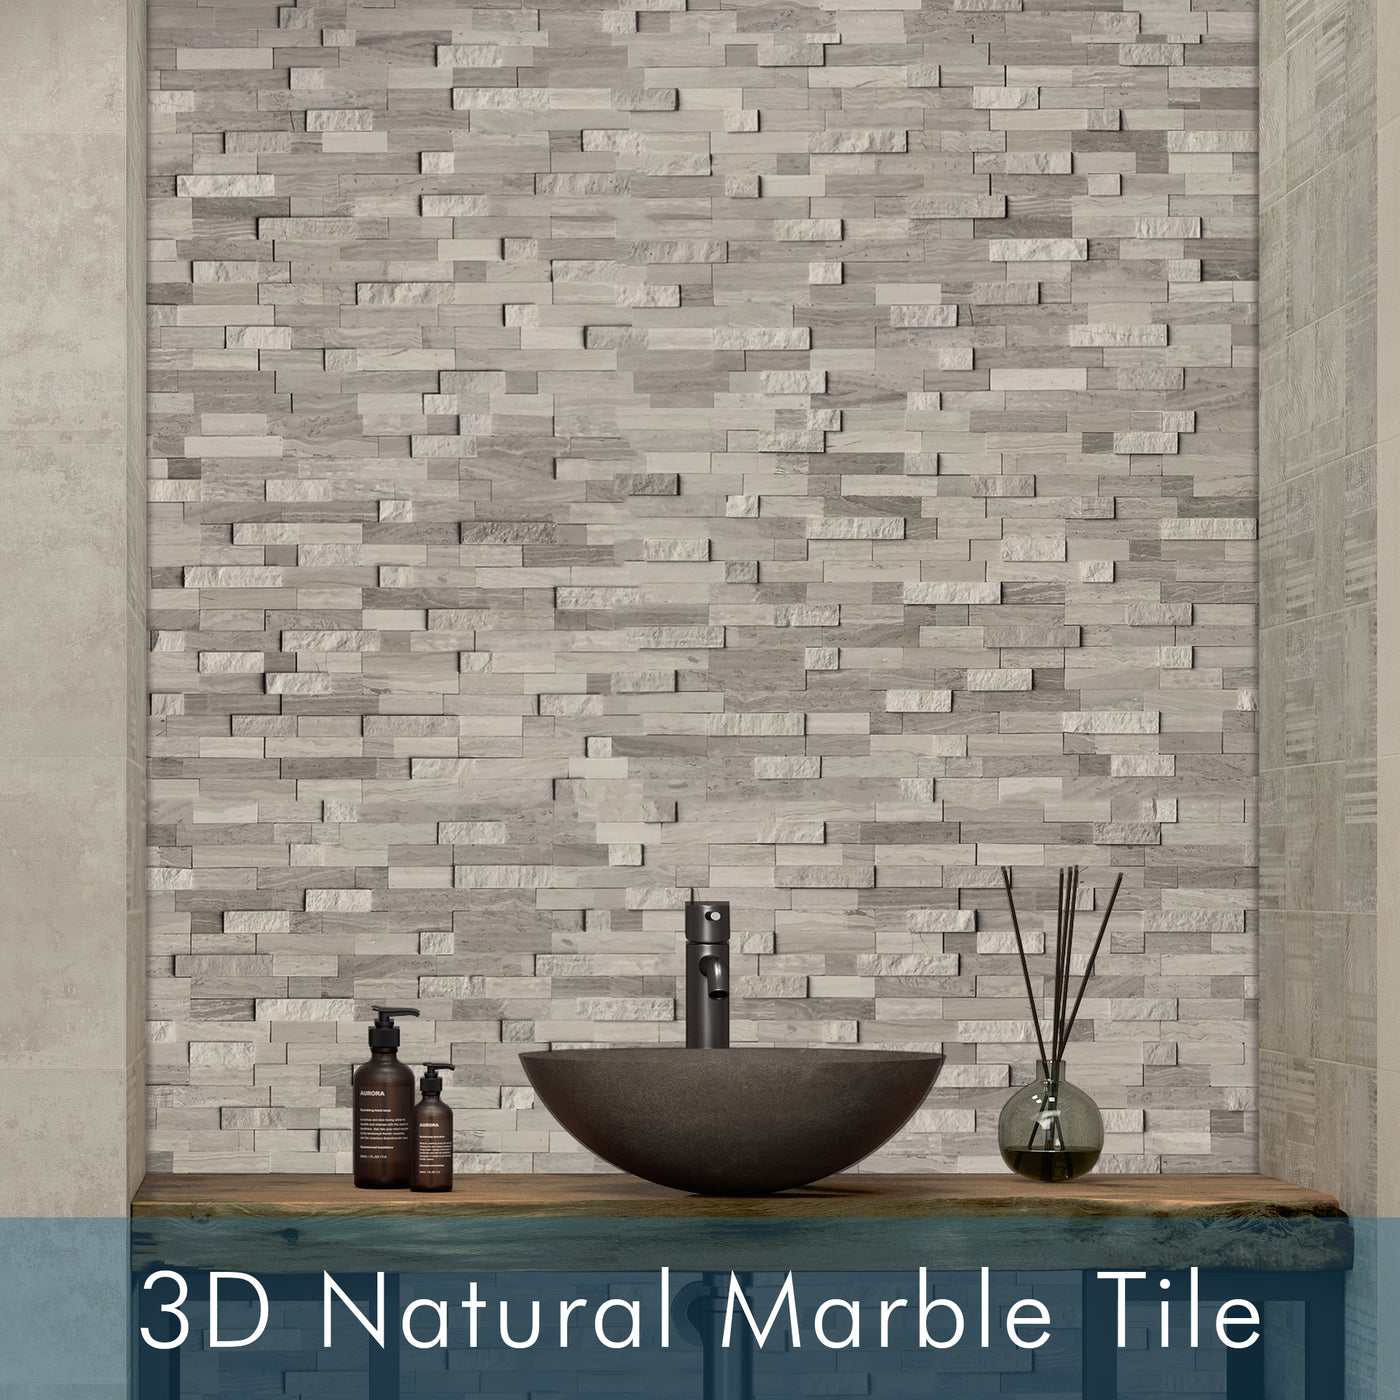 3D Natural Marble Tile